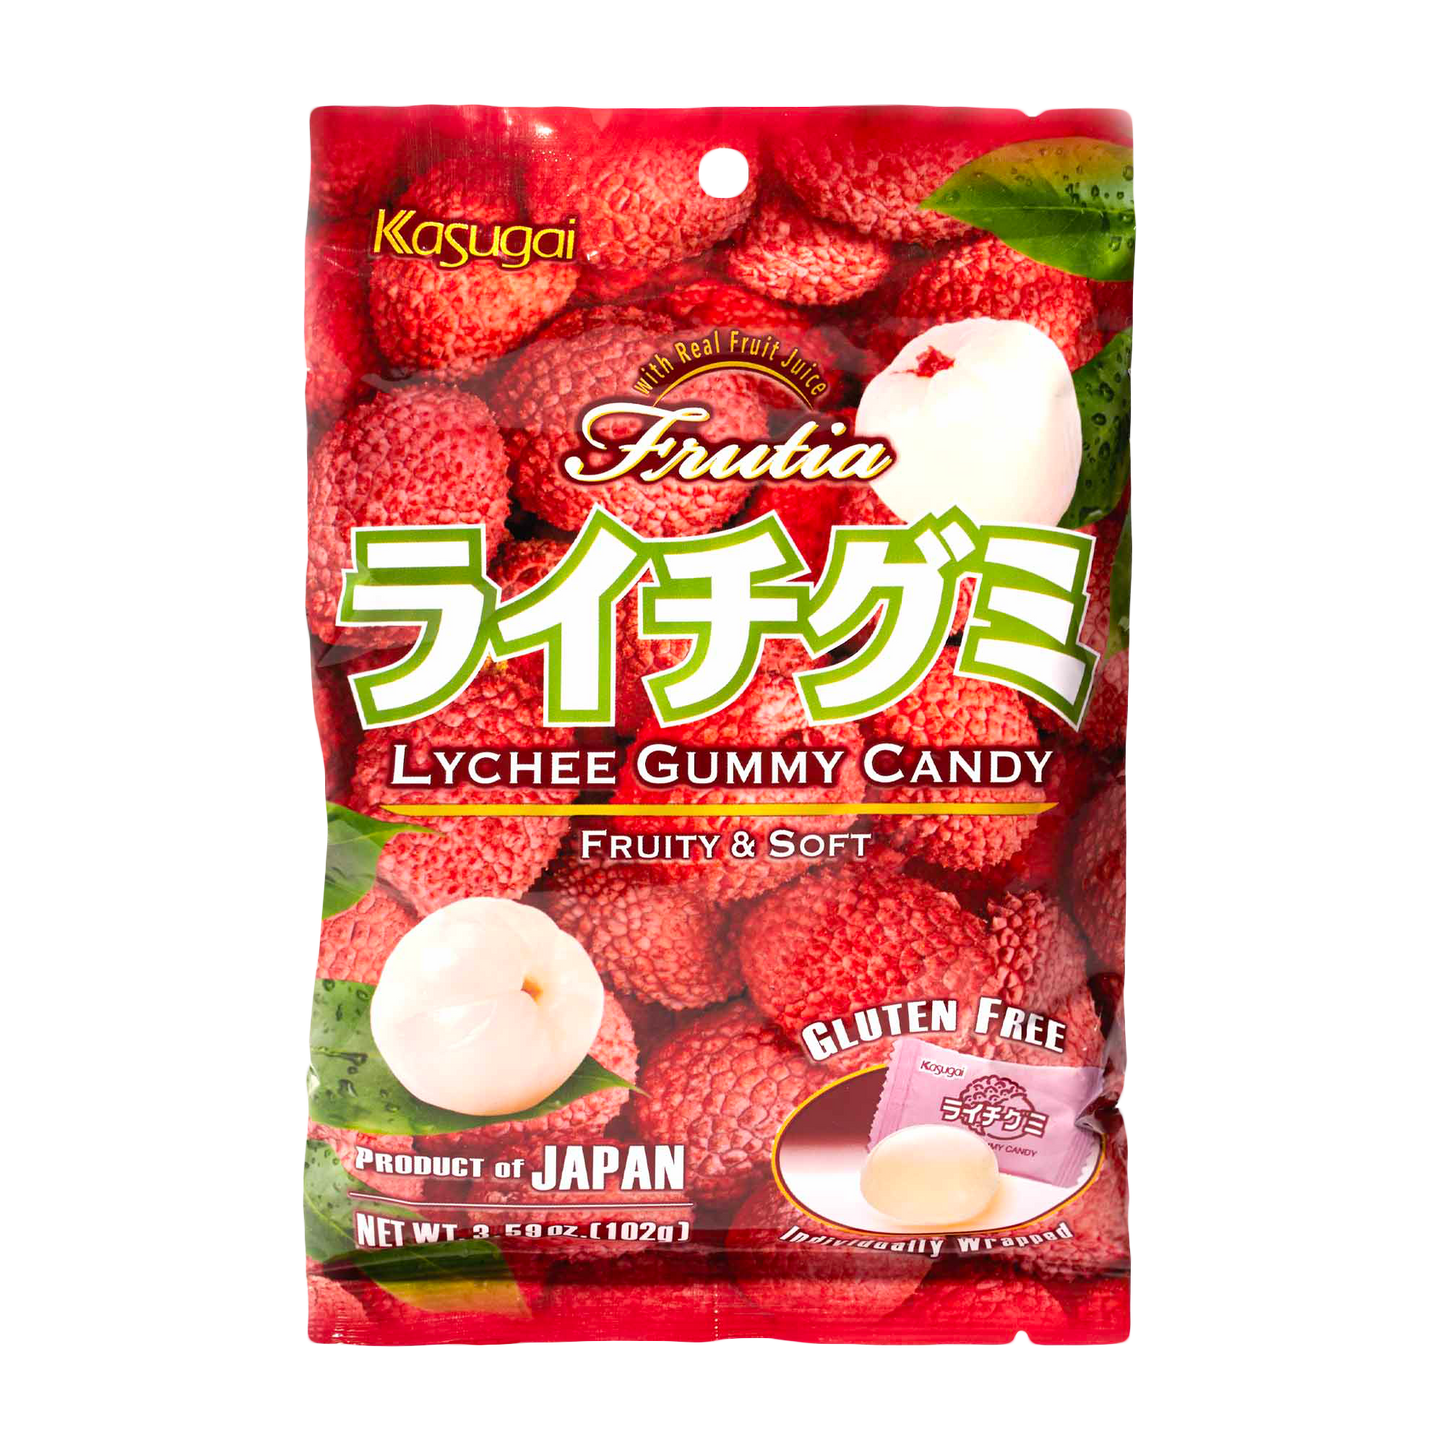 Kasugai Gummy Candy